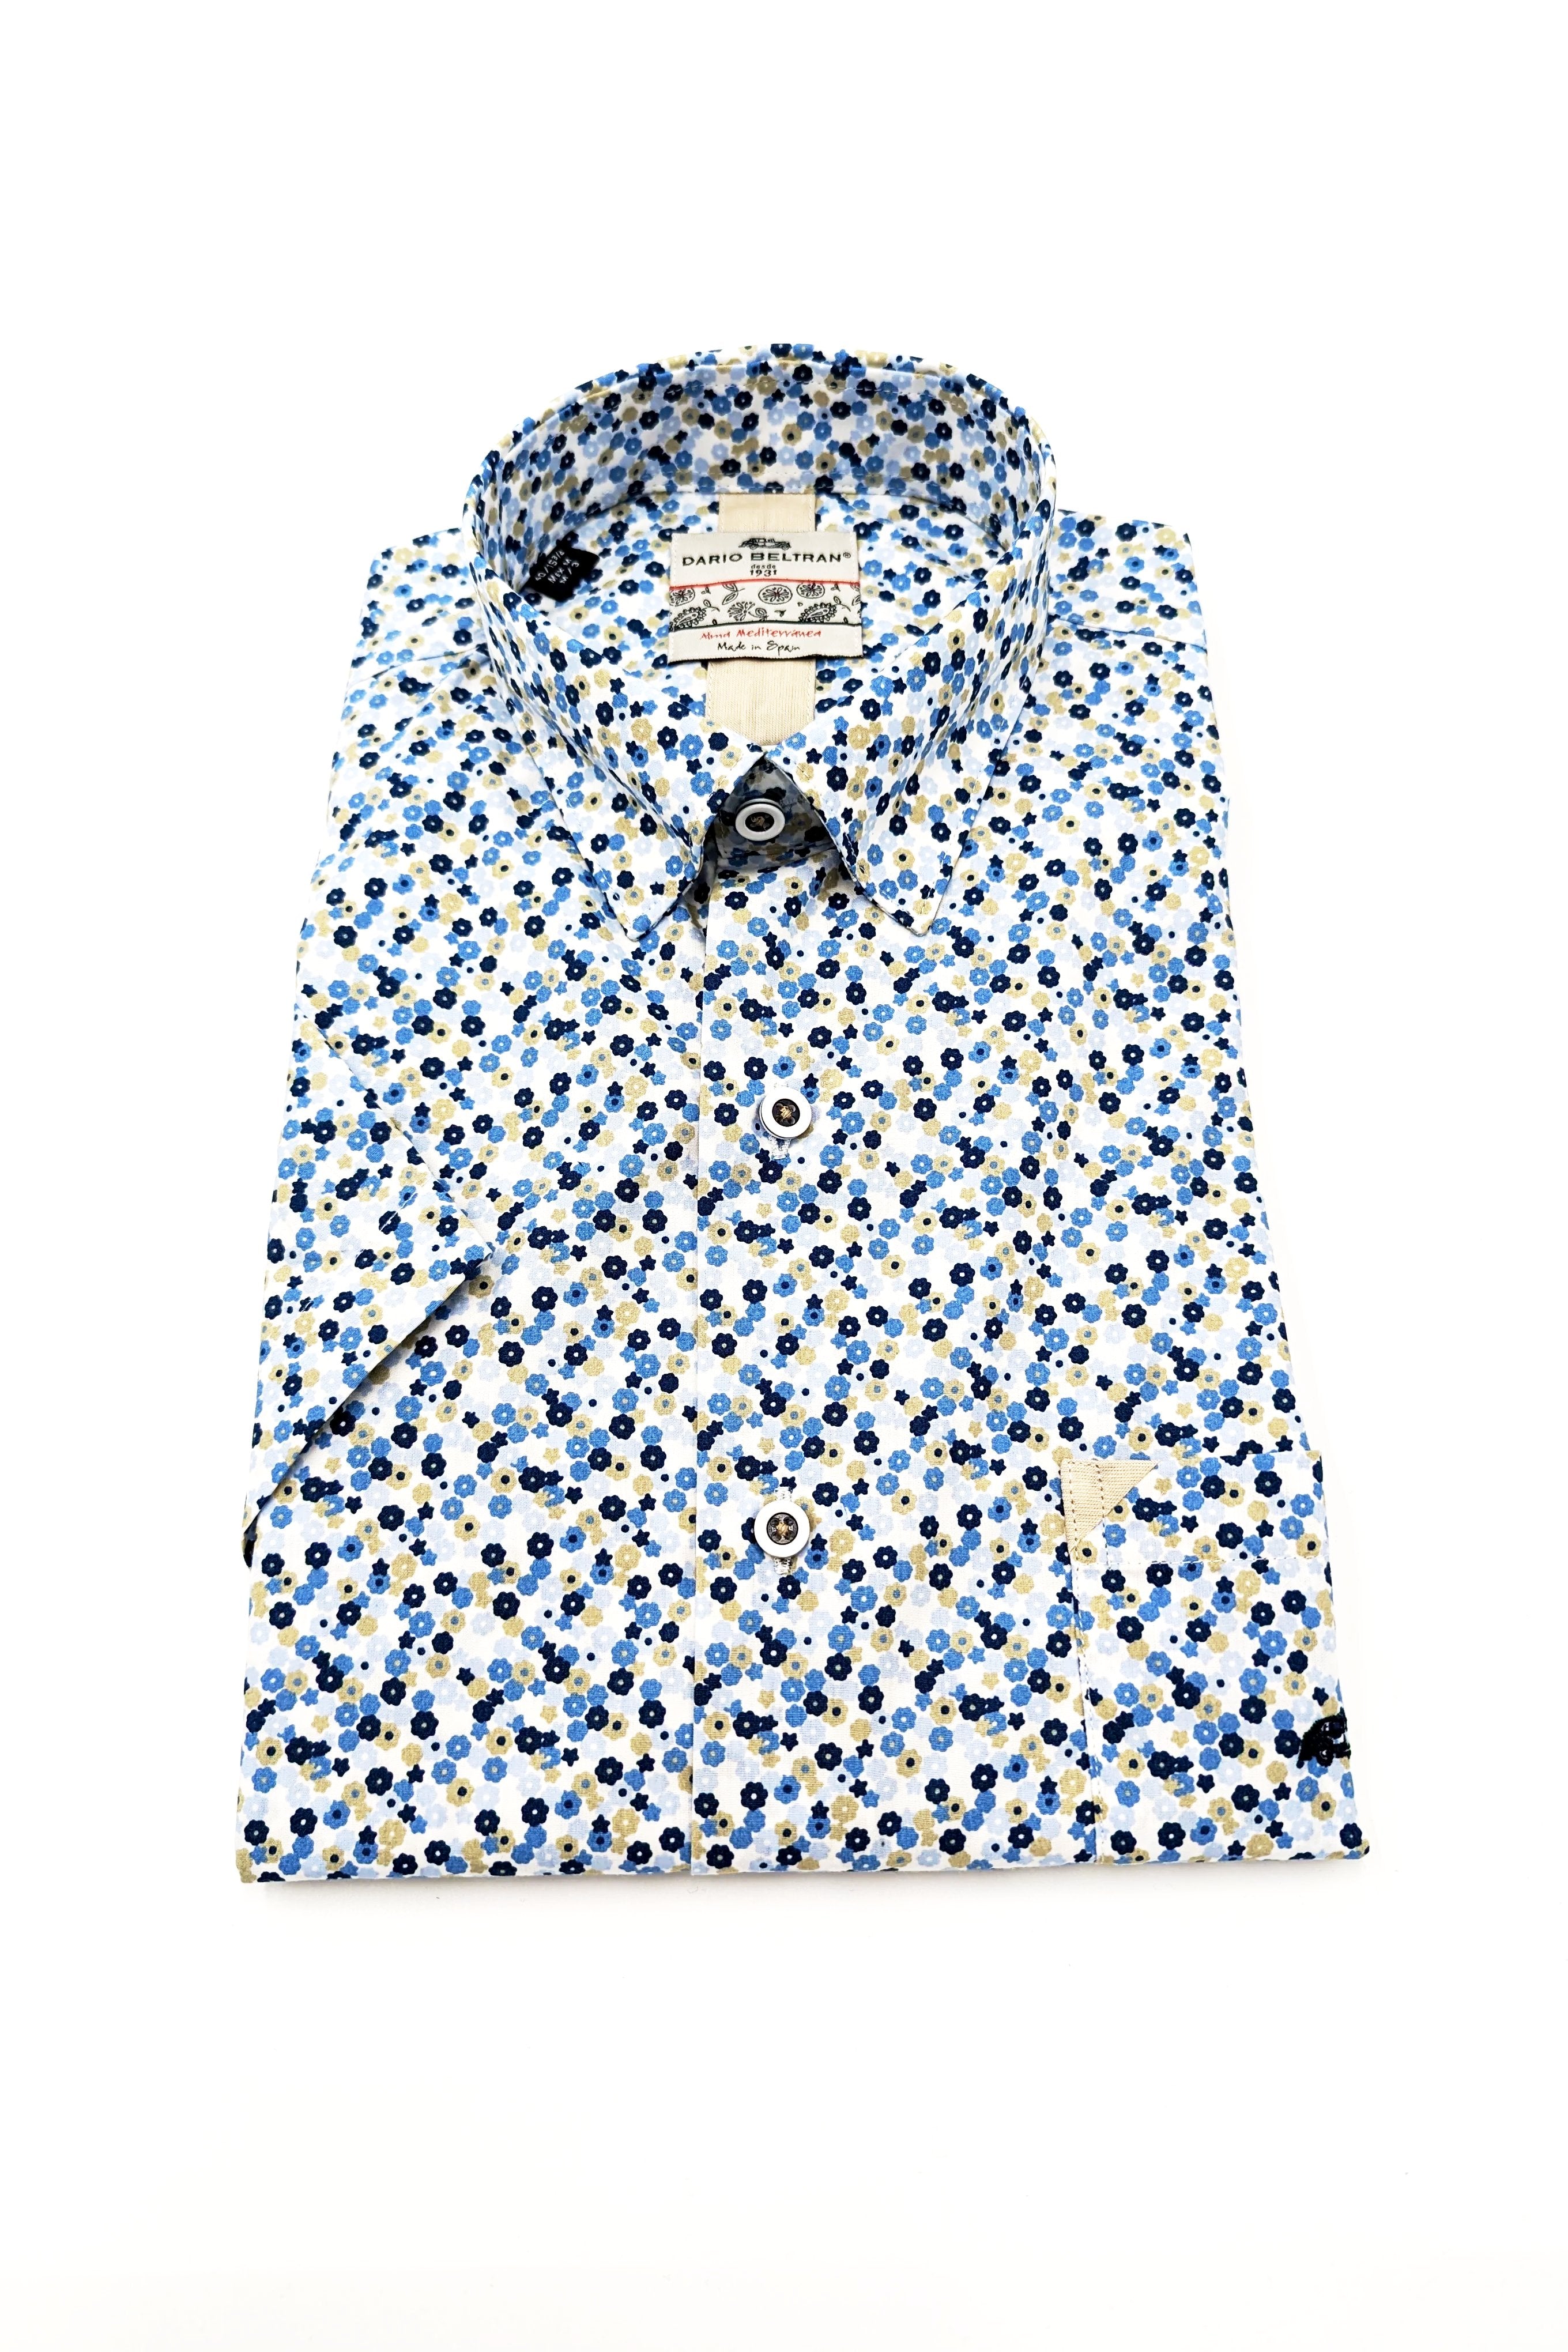 Alzaga Cream/Blue/Navy Flower Shirt